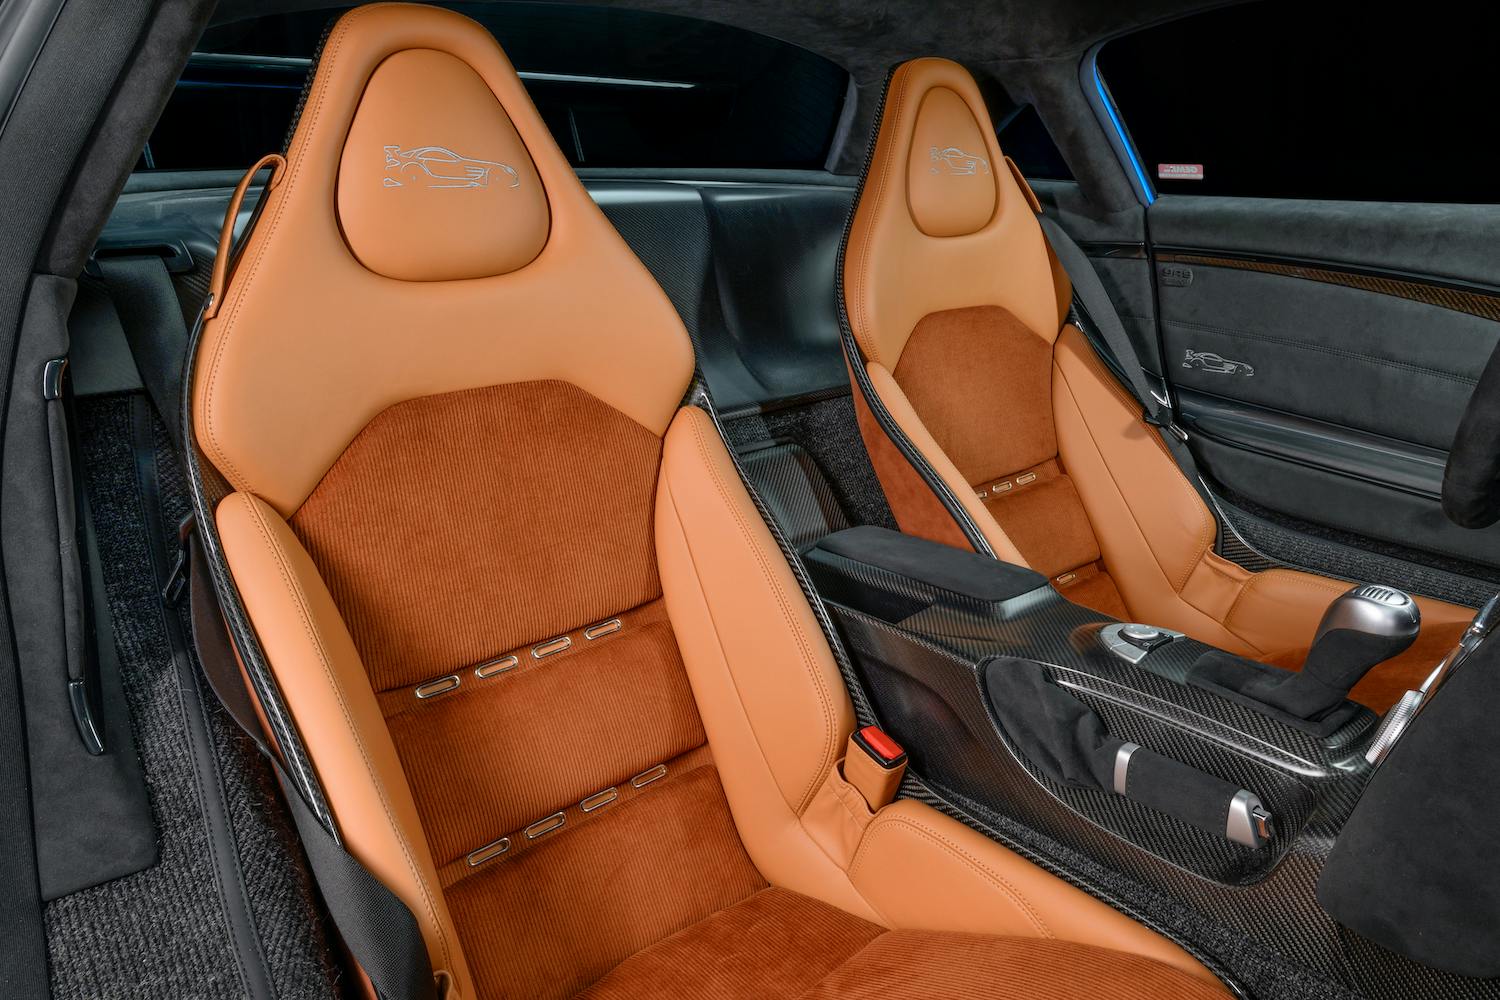 McLaren SLR HDK interior front seats